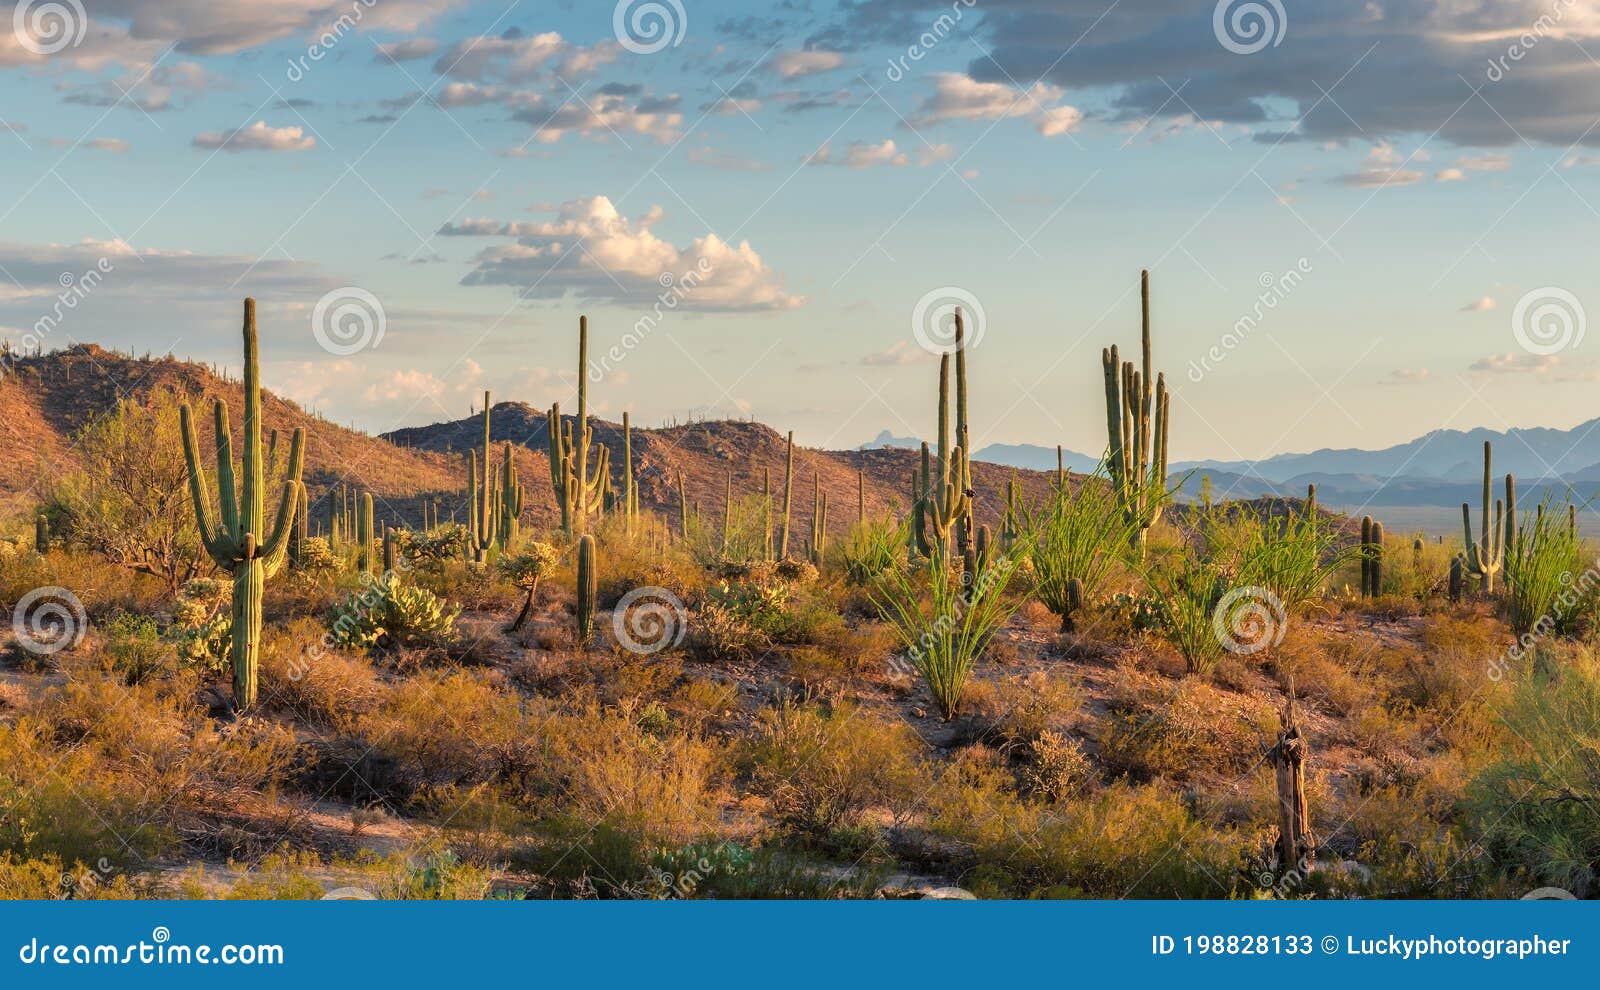 saguaros cactus at sunset in sonoran desert near phoenix, arizona.